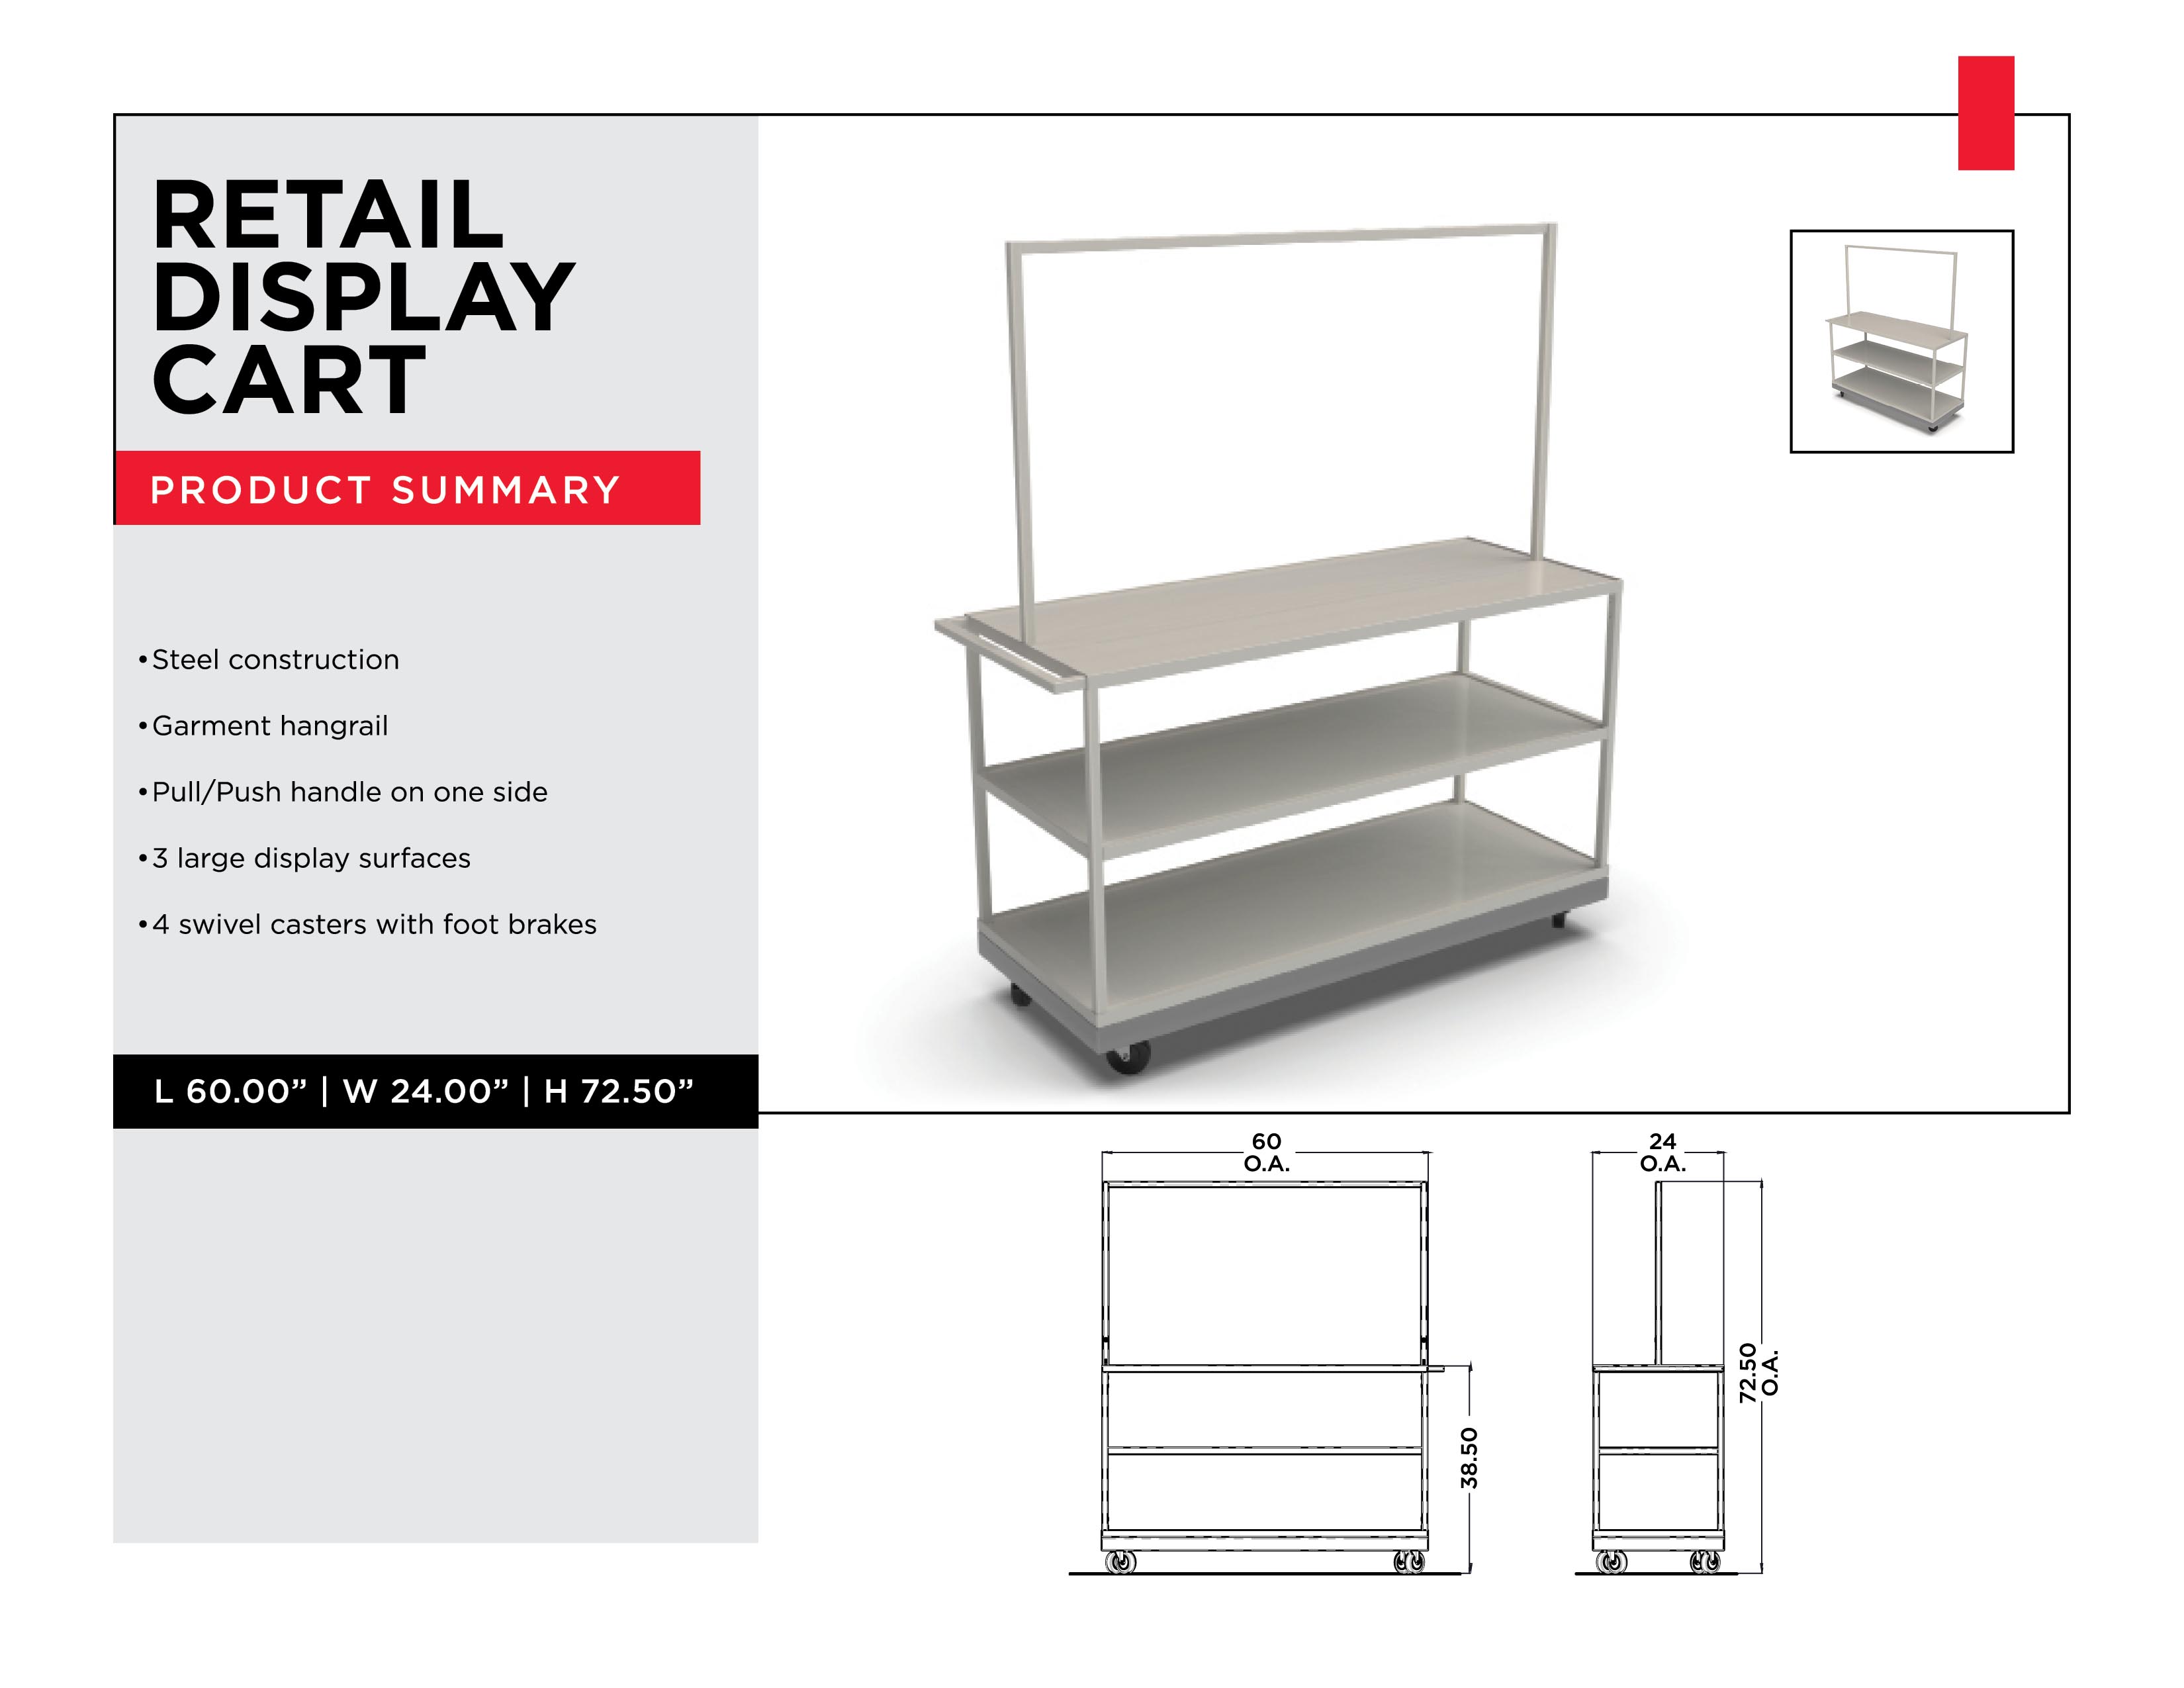 Retail Display Solutions - Retail Display Cart - Material Handling Solutions - Material Handling Equipment - Material Handling